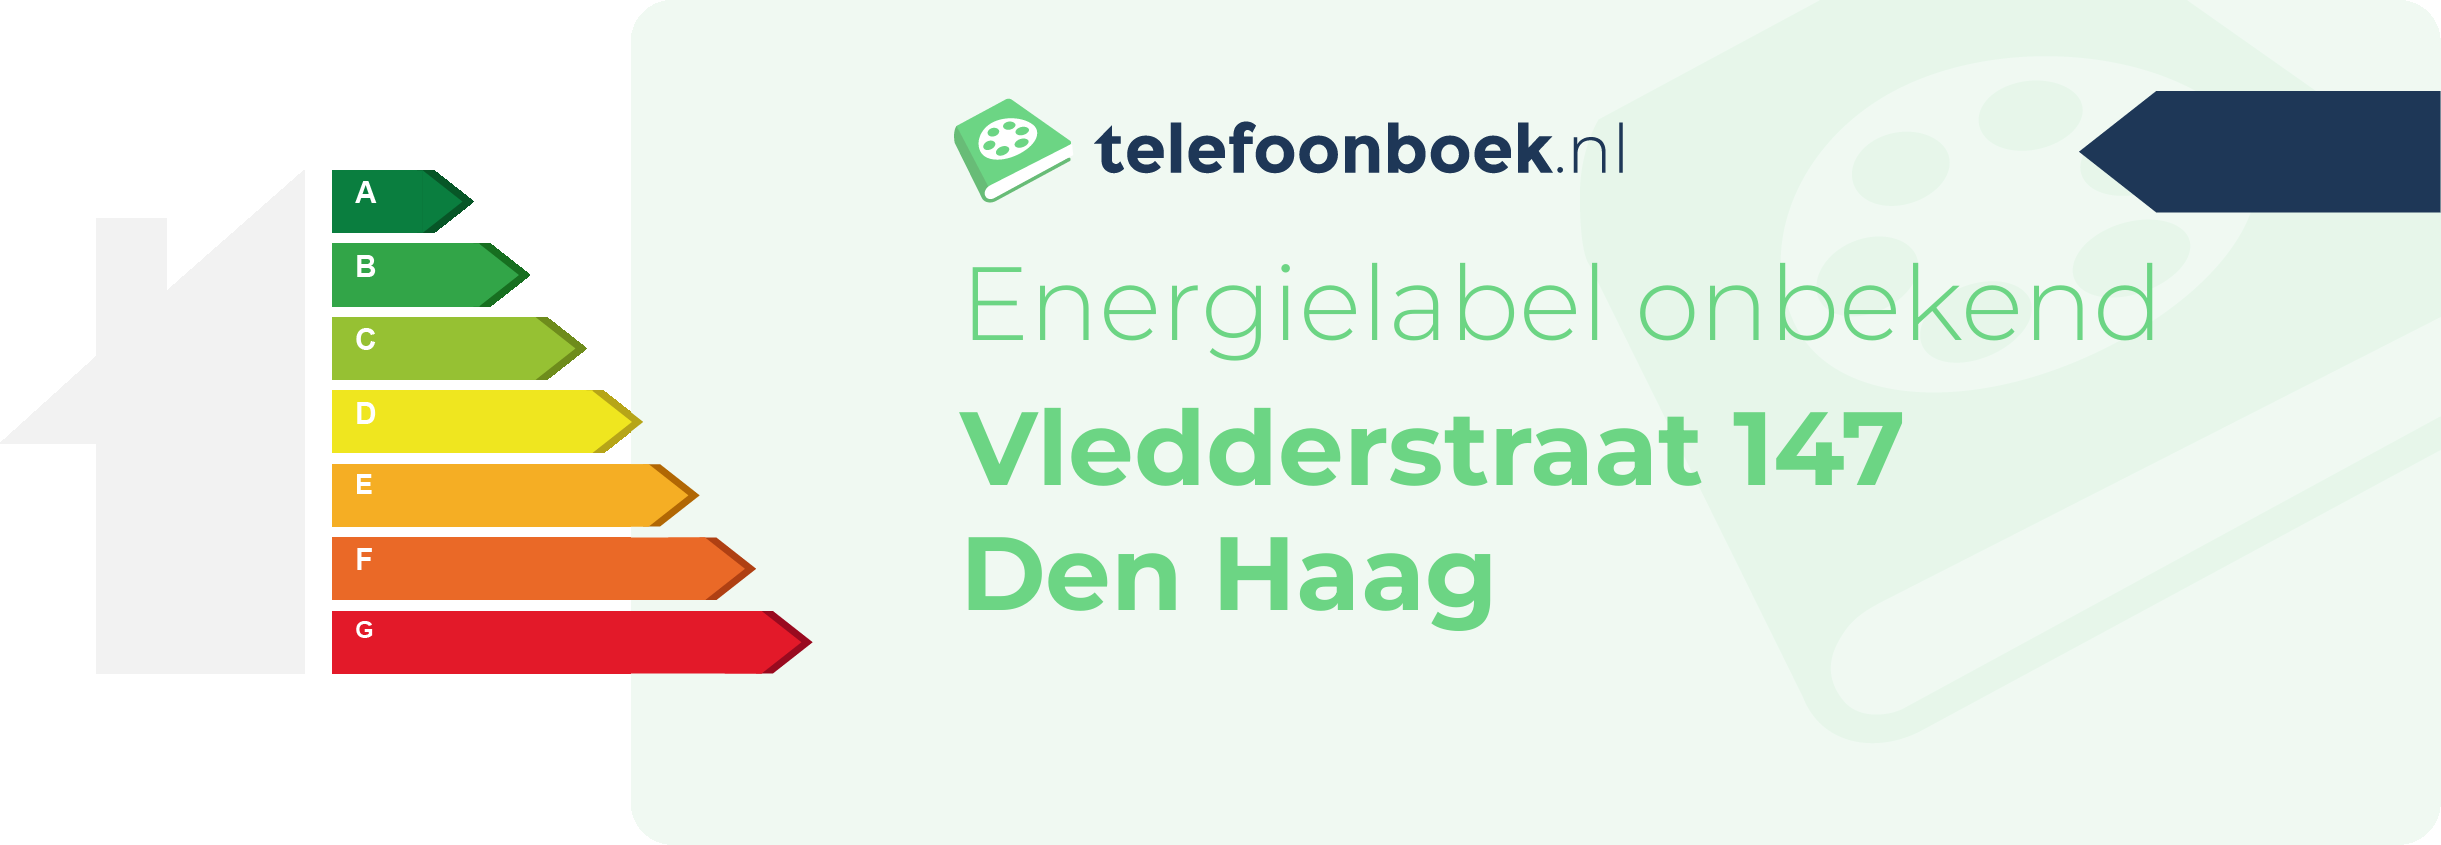 Energielabel Vledderstraat 147 Den Haag